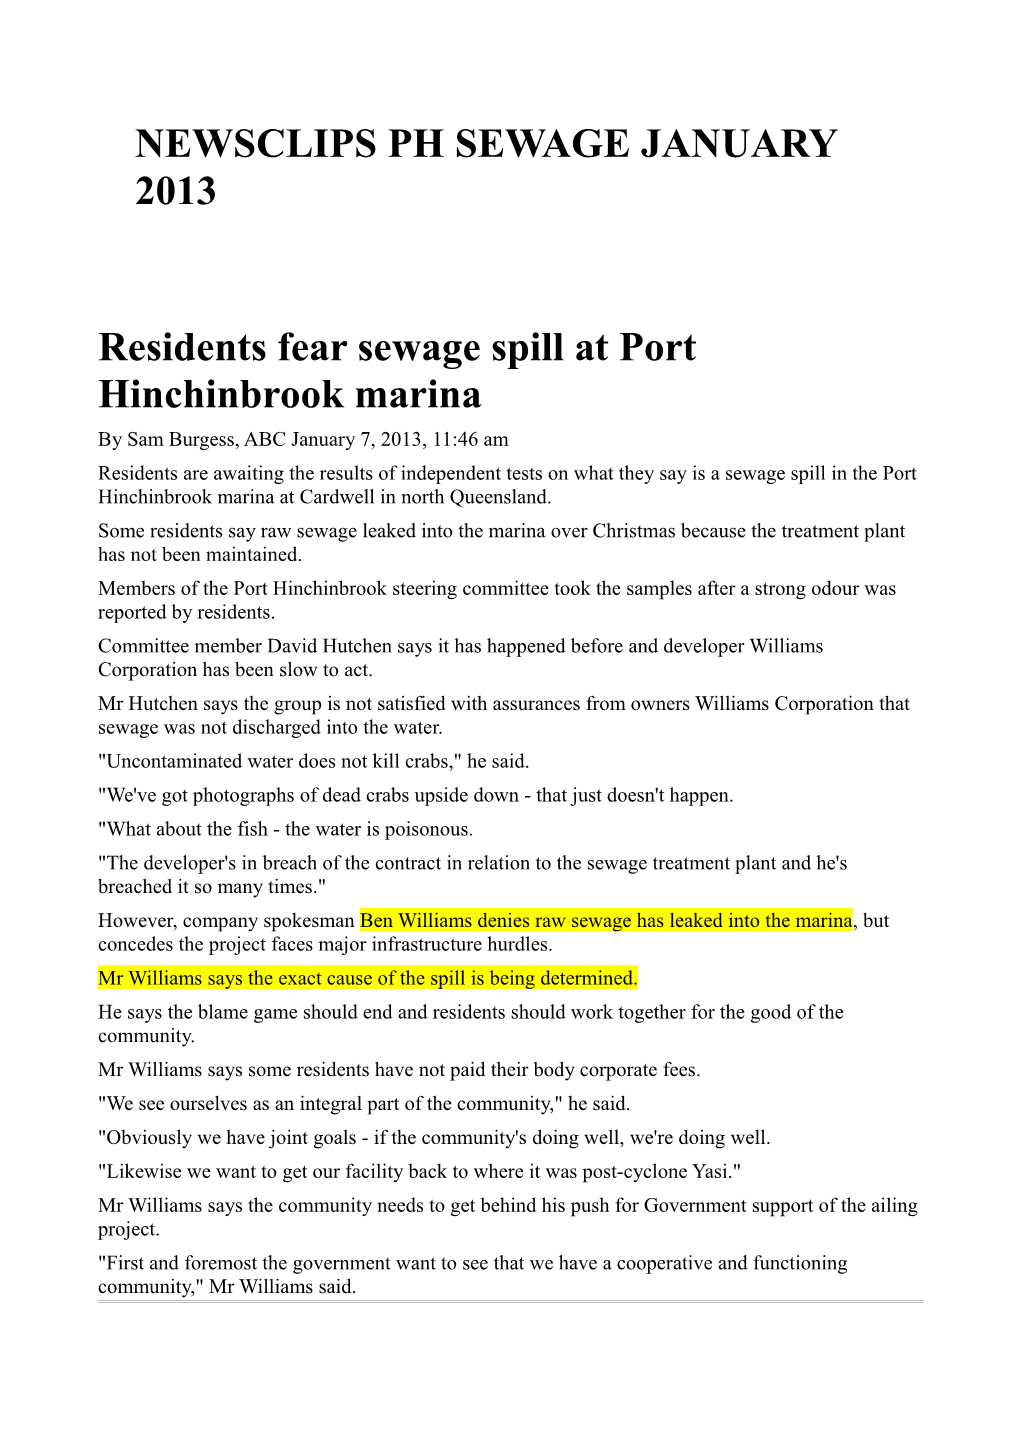 Residents Fear Sewage Spill at Port Hinchinbrook Marina